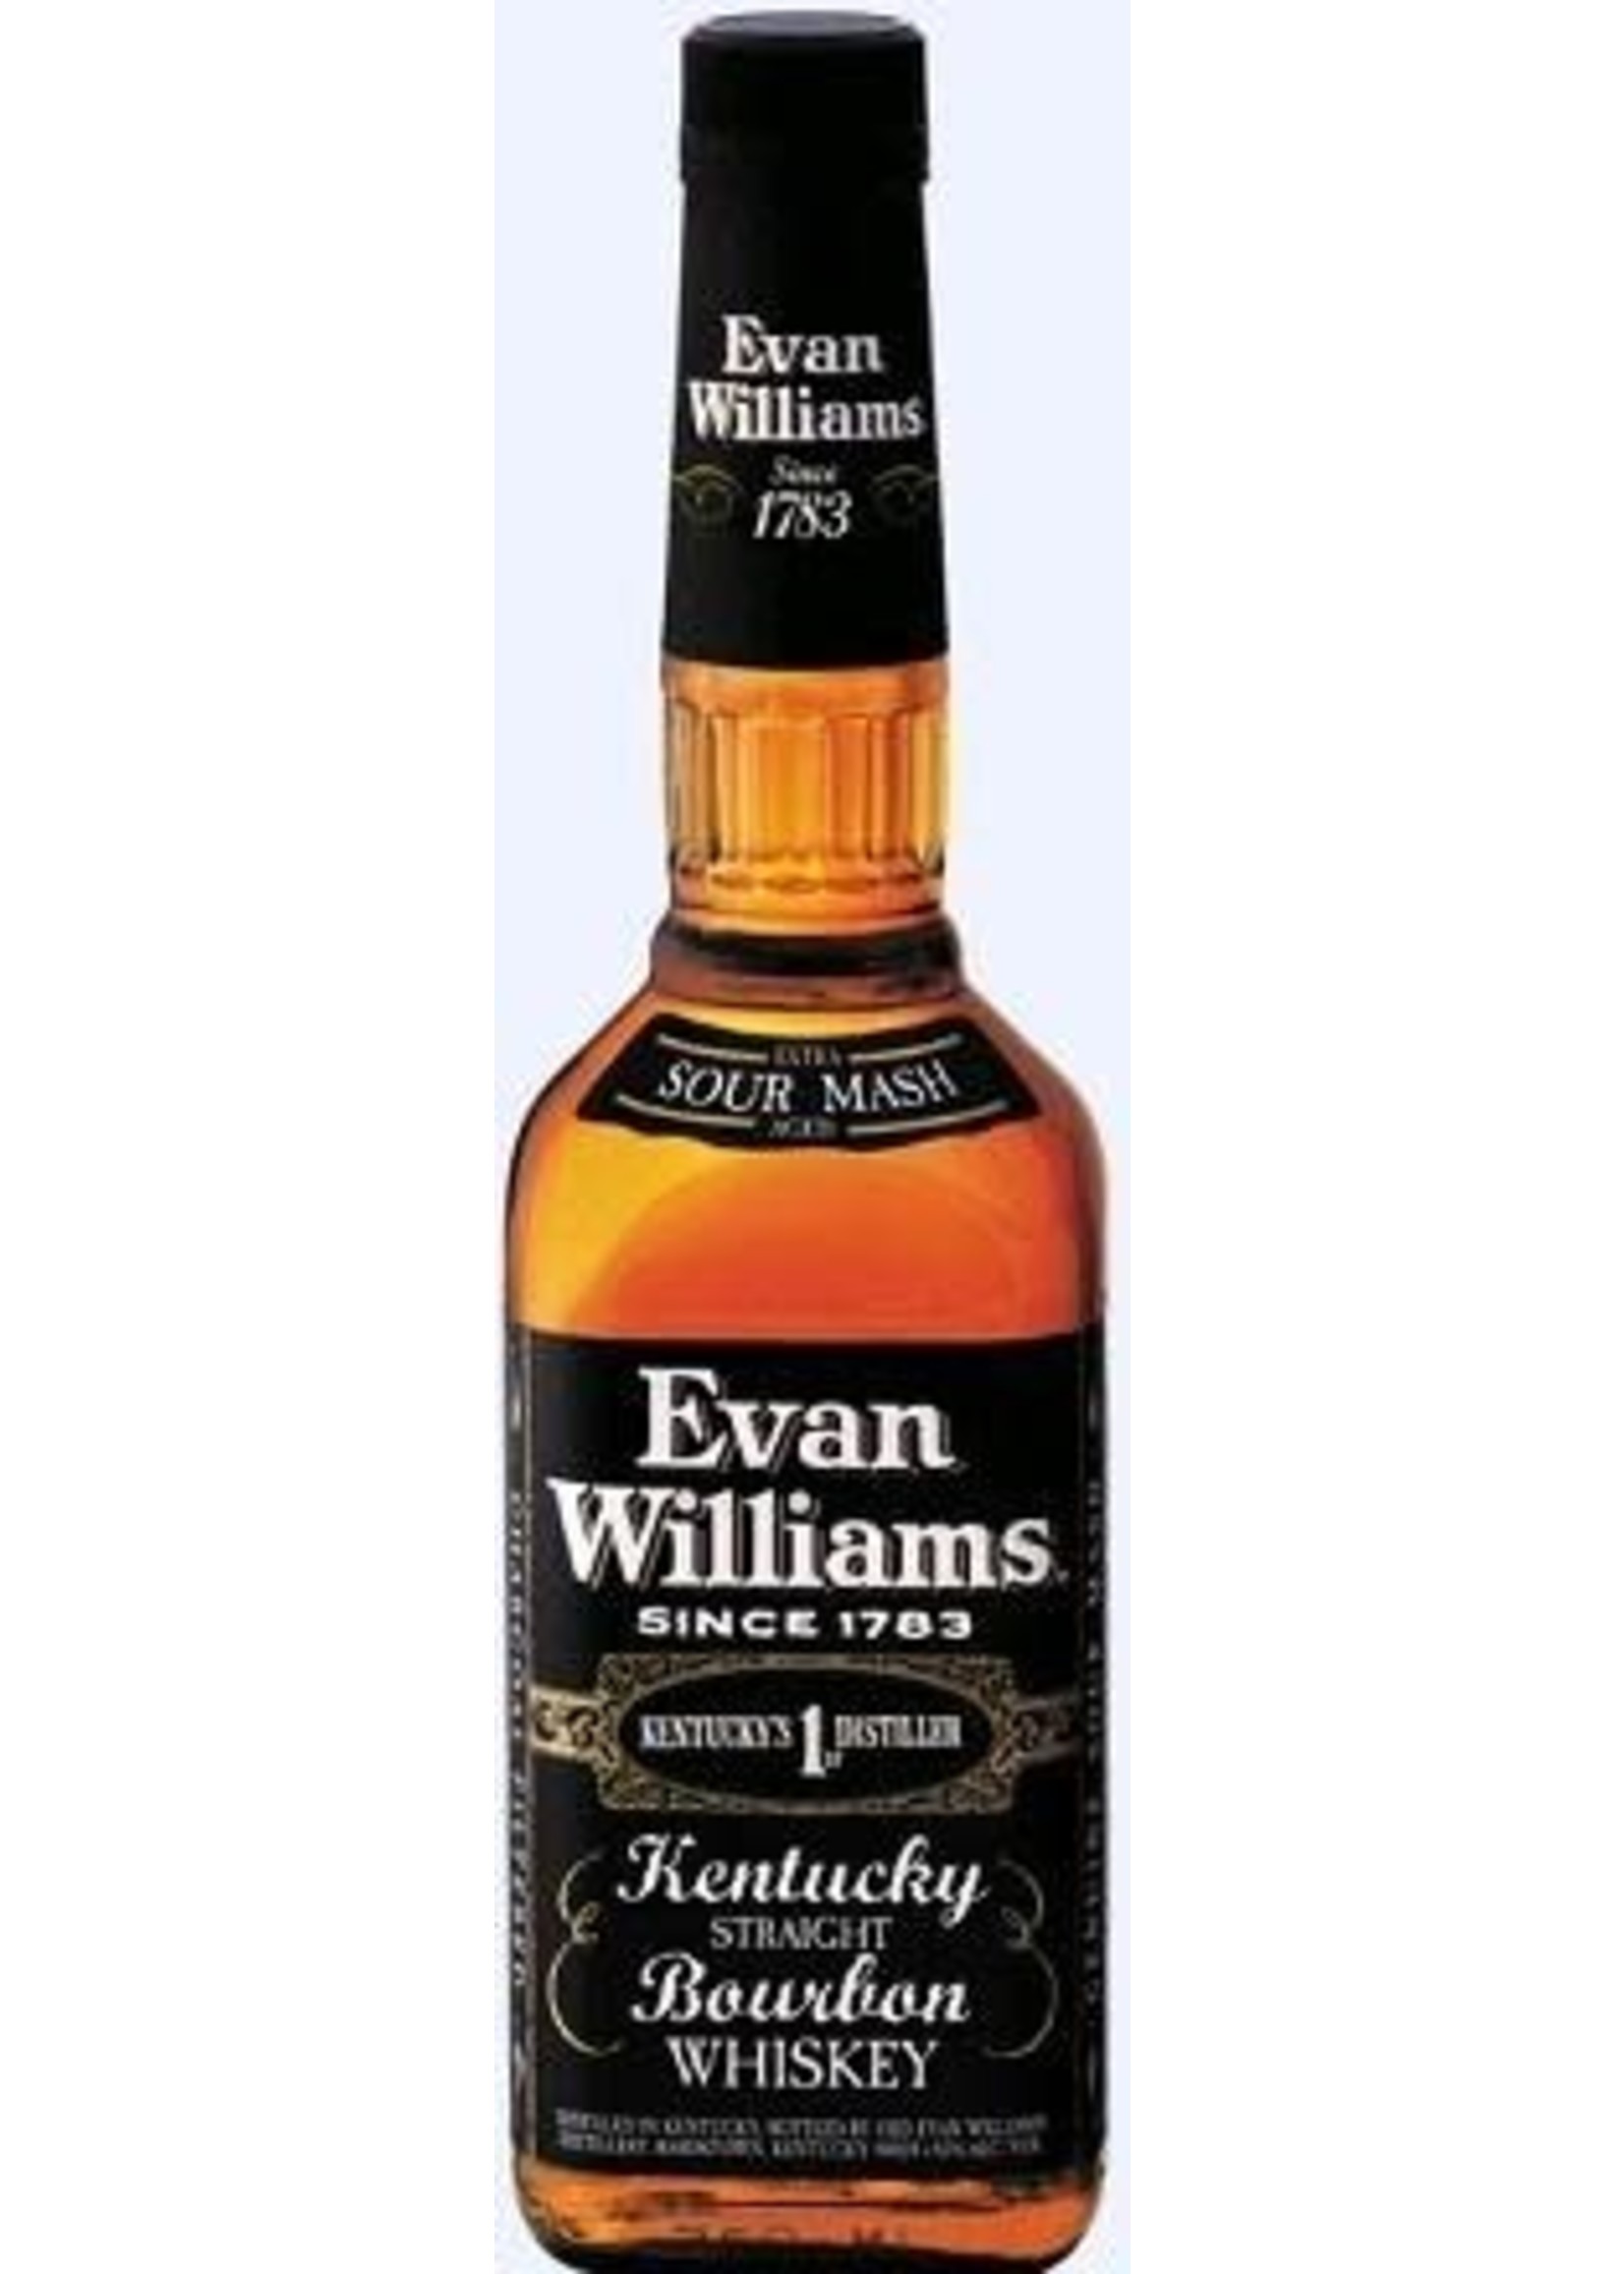 Evan Williams Evan Williams / Bourbon